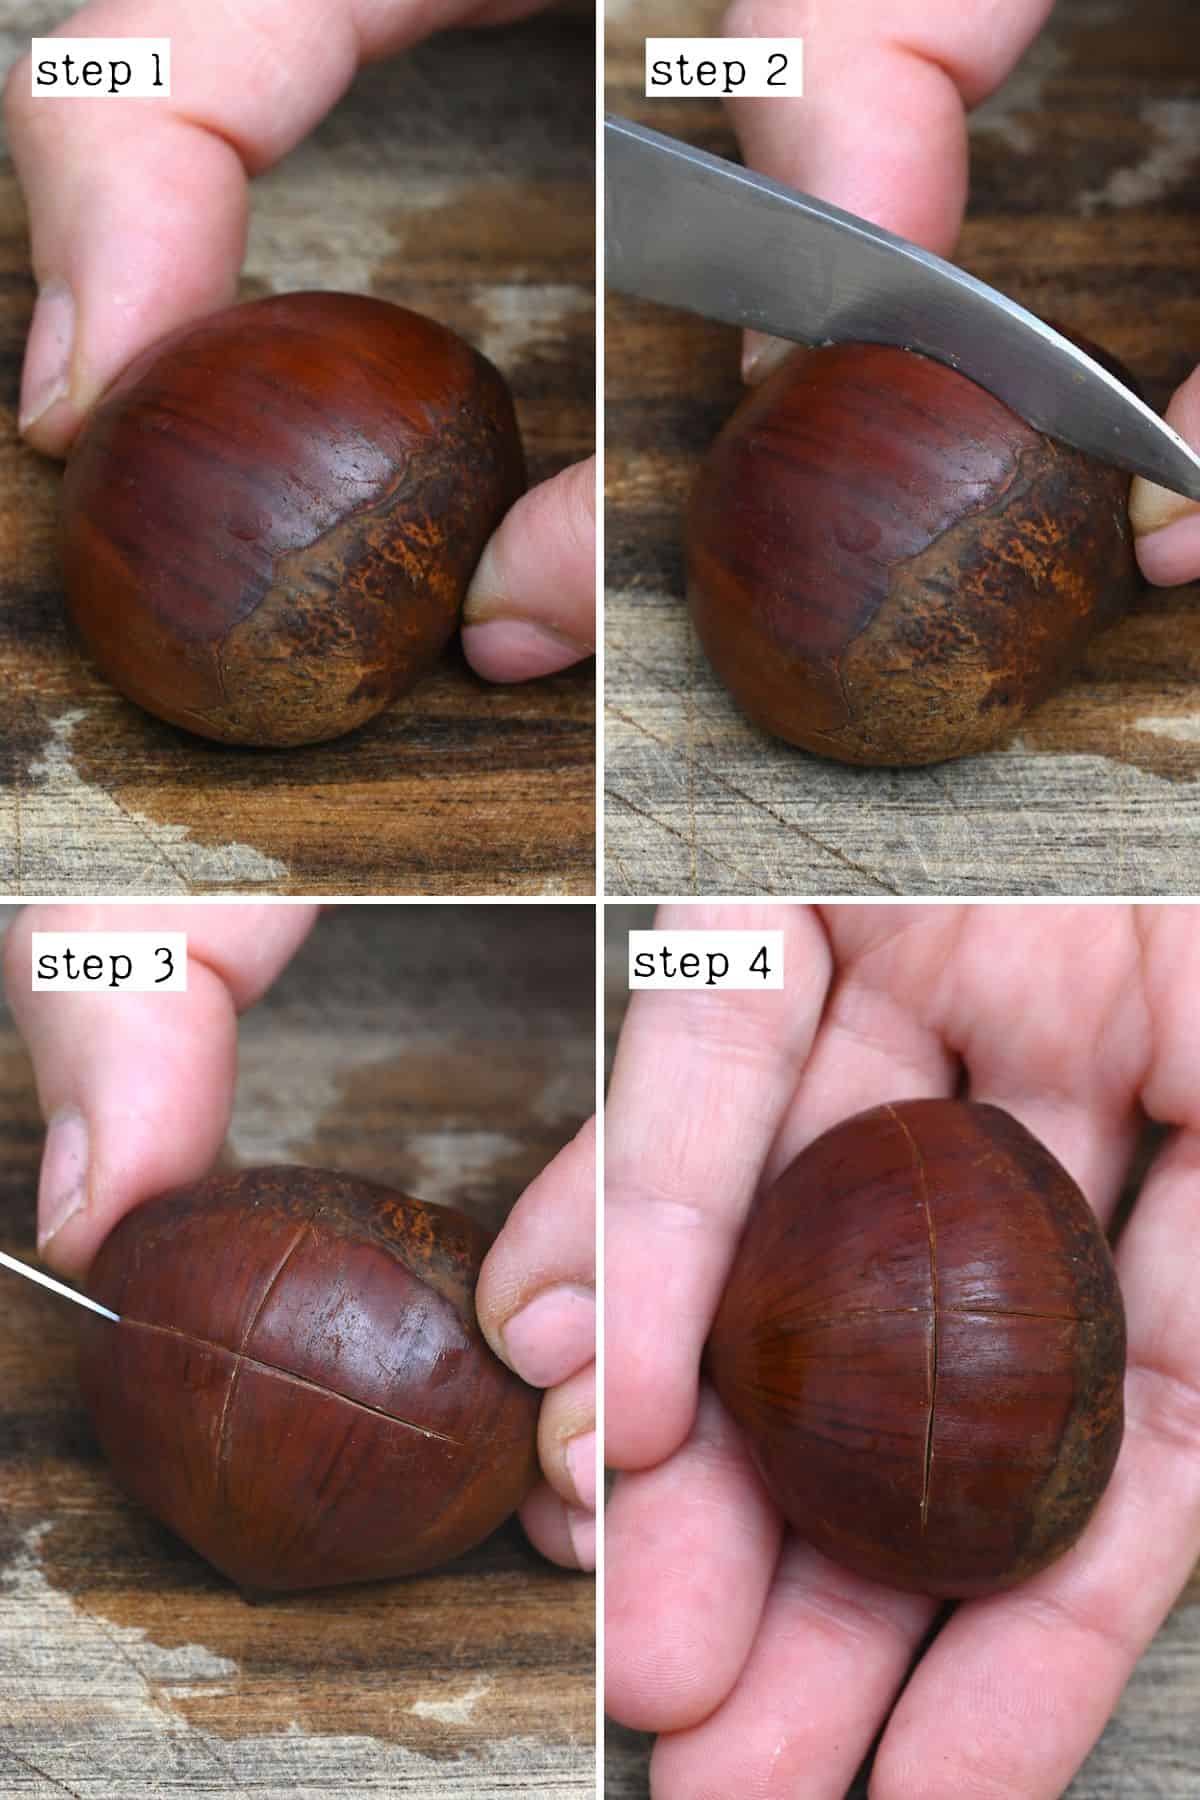 Steps for scoring chestnuts